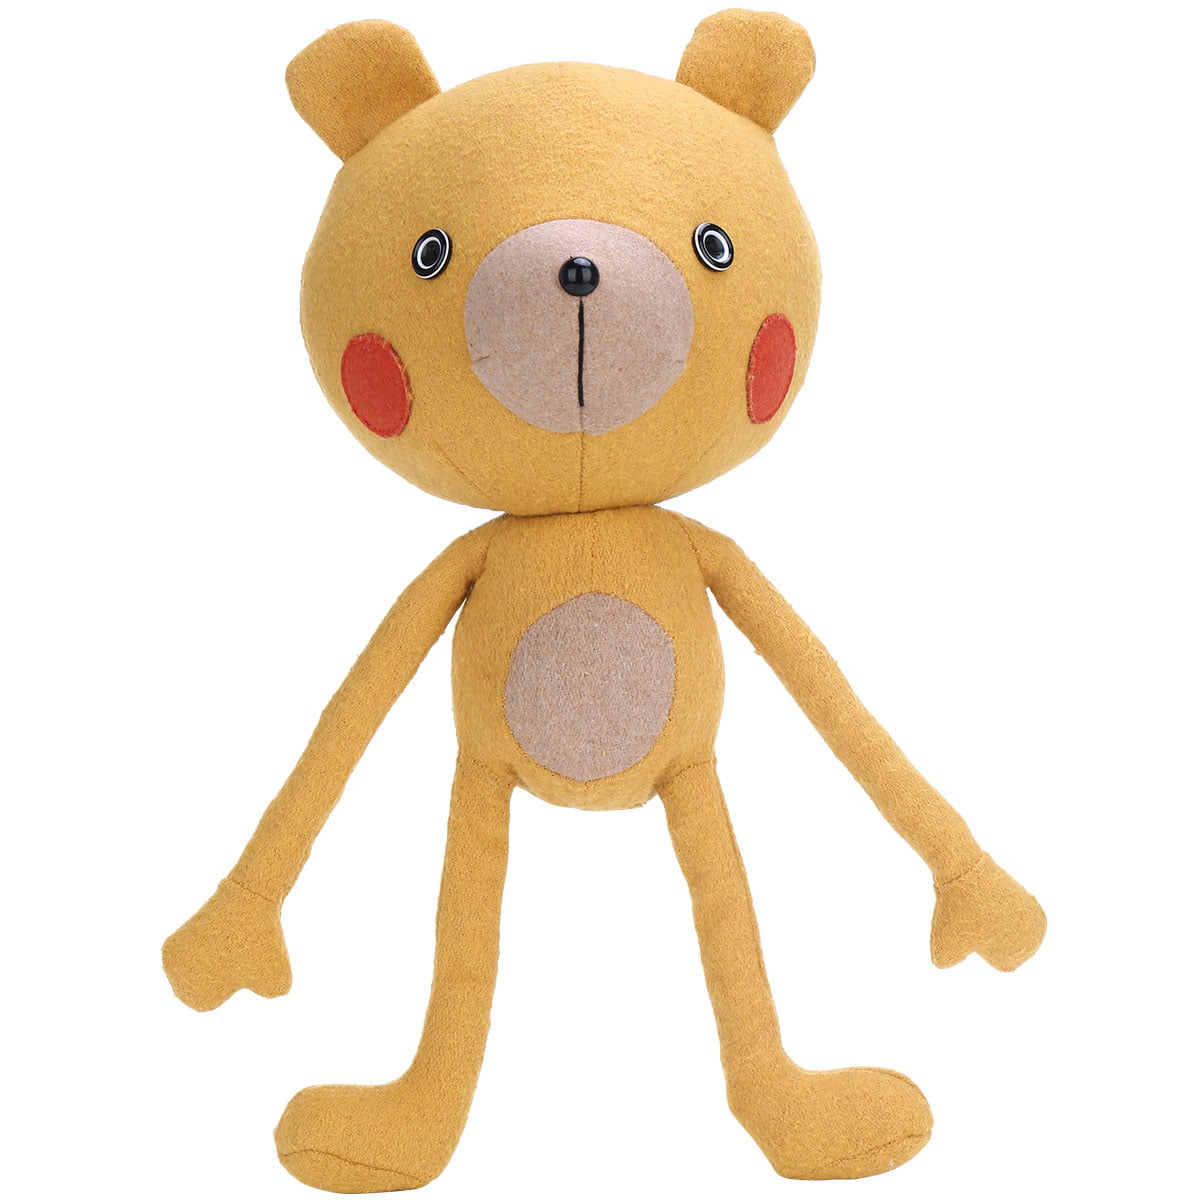 Details about  / Brown Teddy Bear Stuffed Animal Teddy Bear Cartoon Animal Plush Doll Toys 35cm